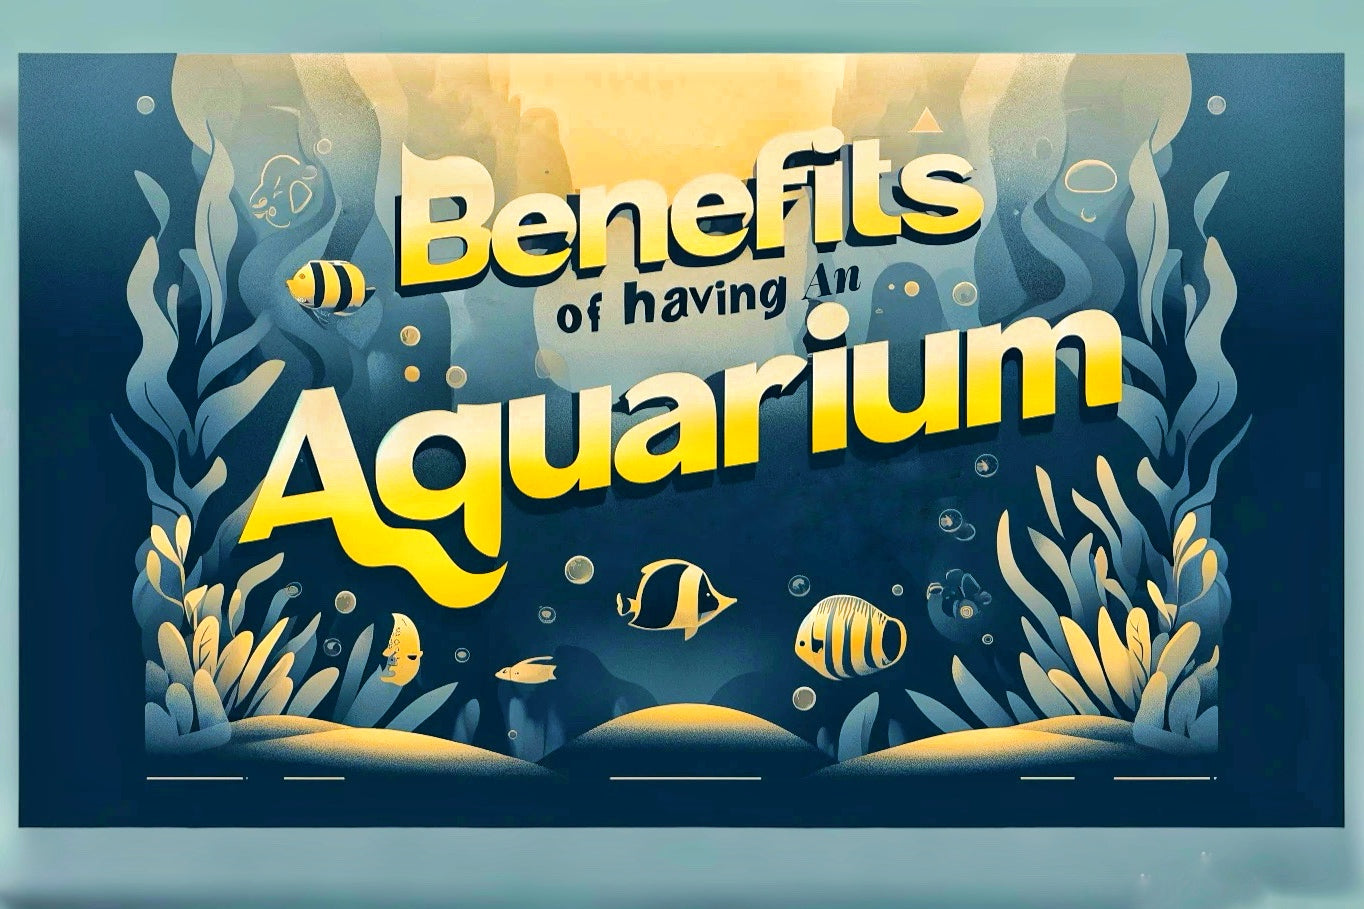 The Psychological Benefits of Having an Aquarium